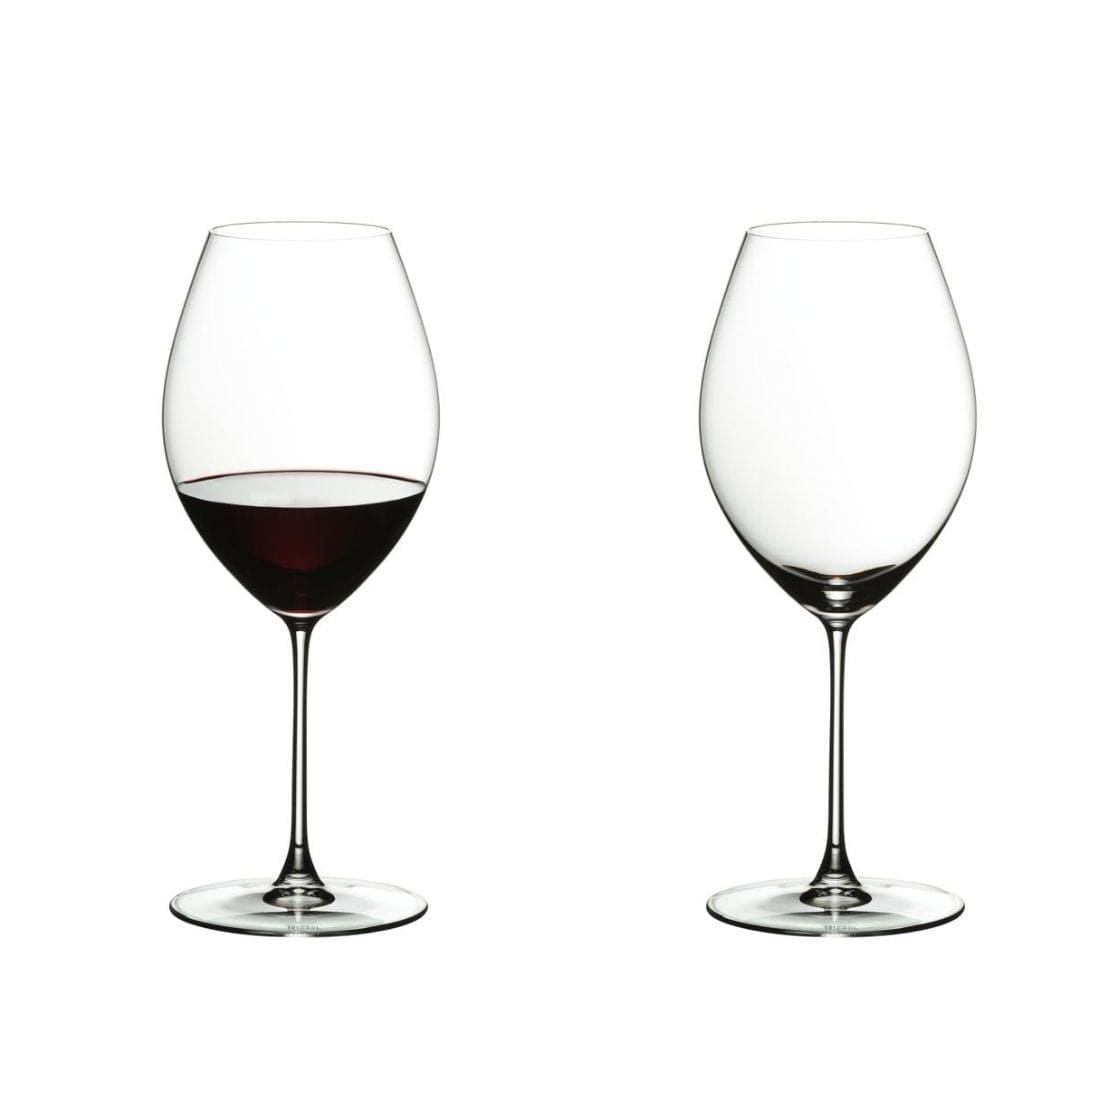 Riedel Veritas - Old World Syrah Wine Glasses (2 Pack)